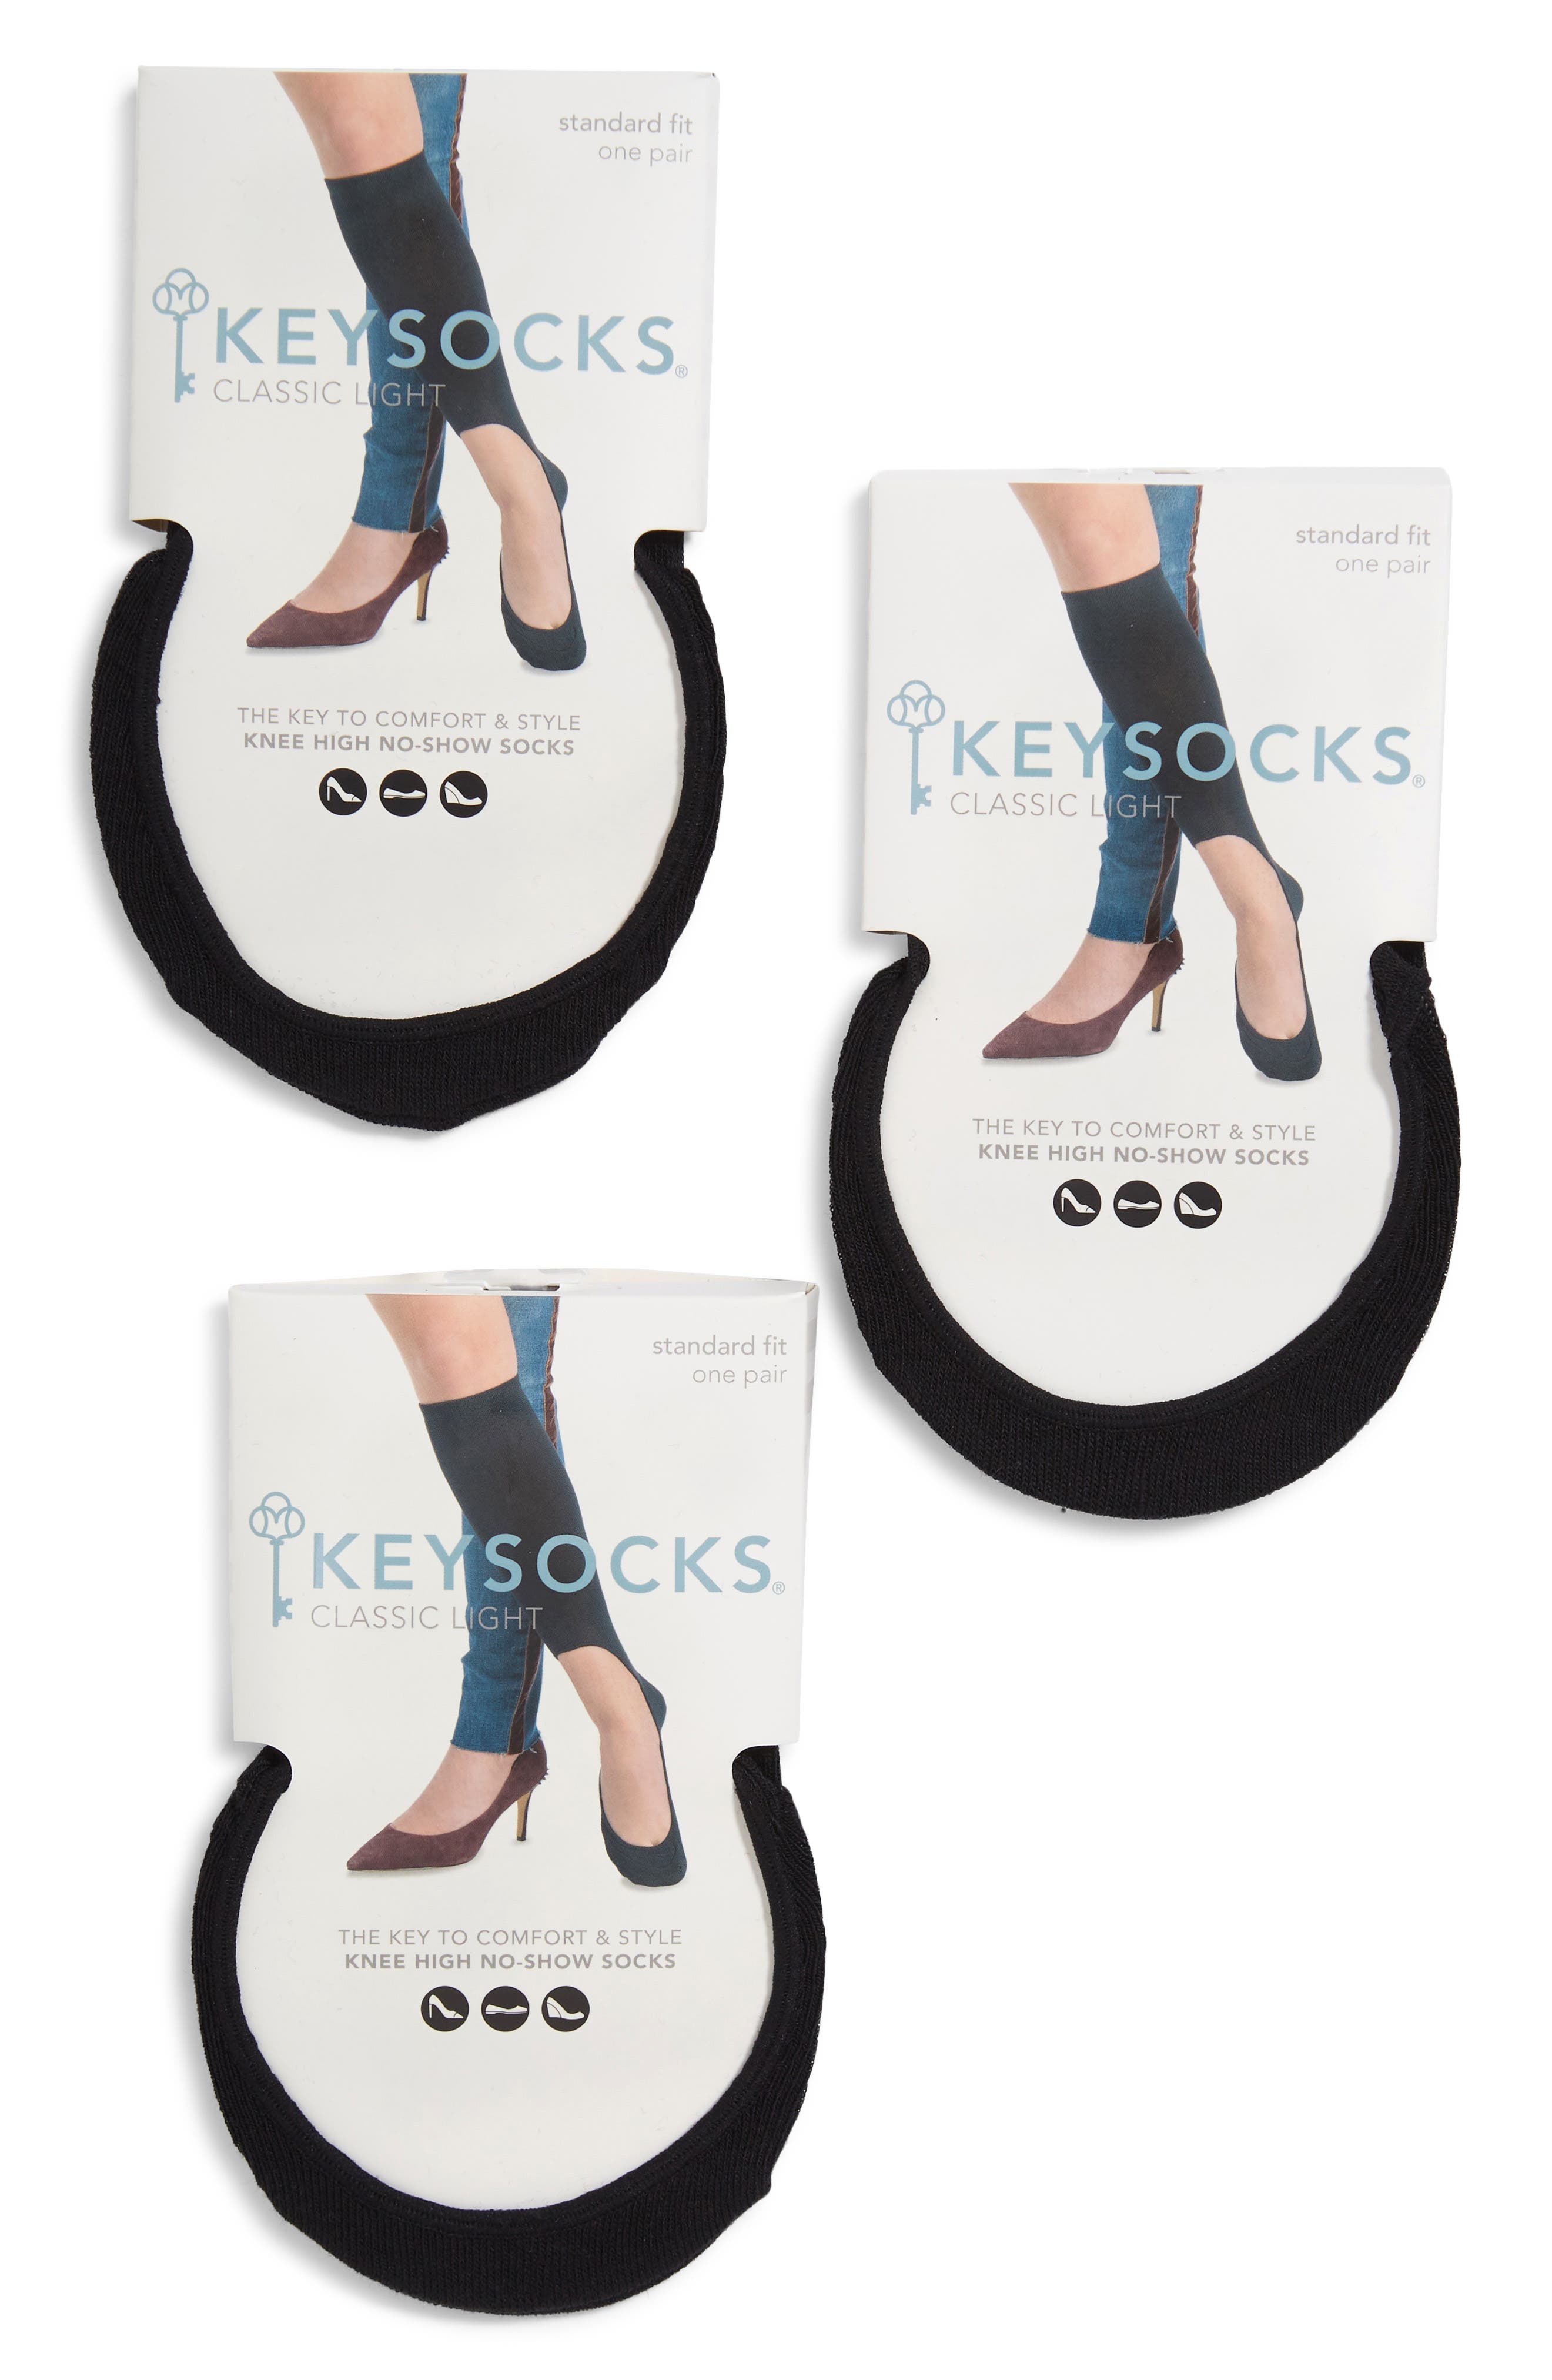 KEYSOCKS Classic Light 3-Pack No-Show Socks in Black at Nordstrom